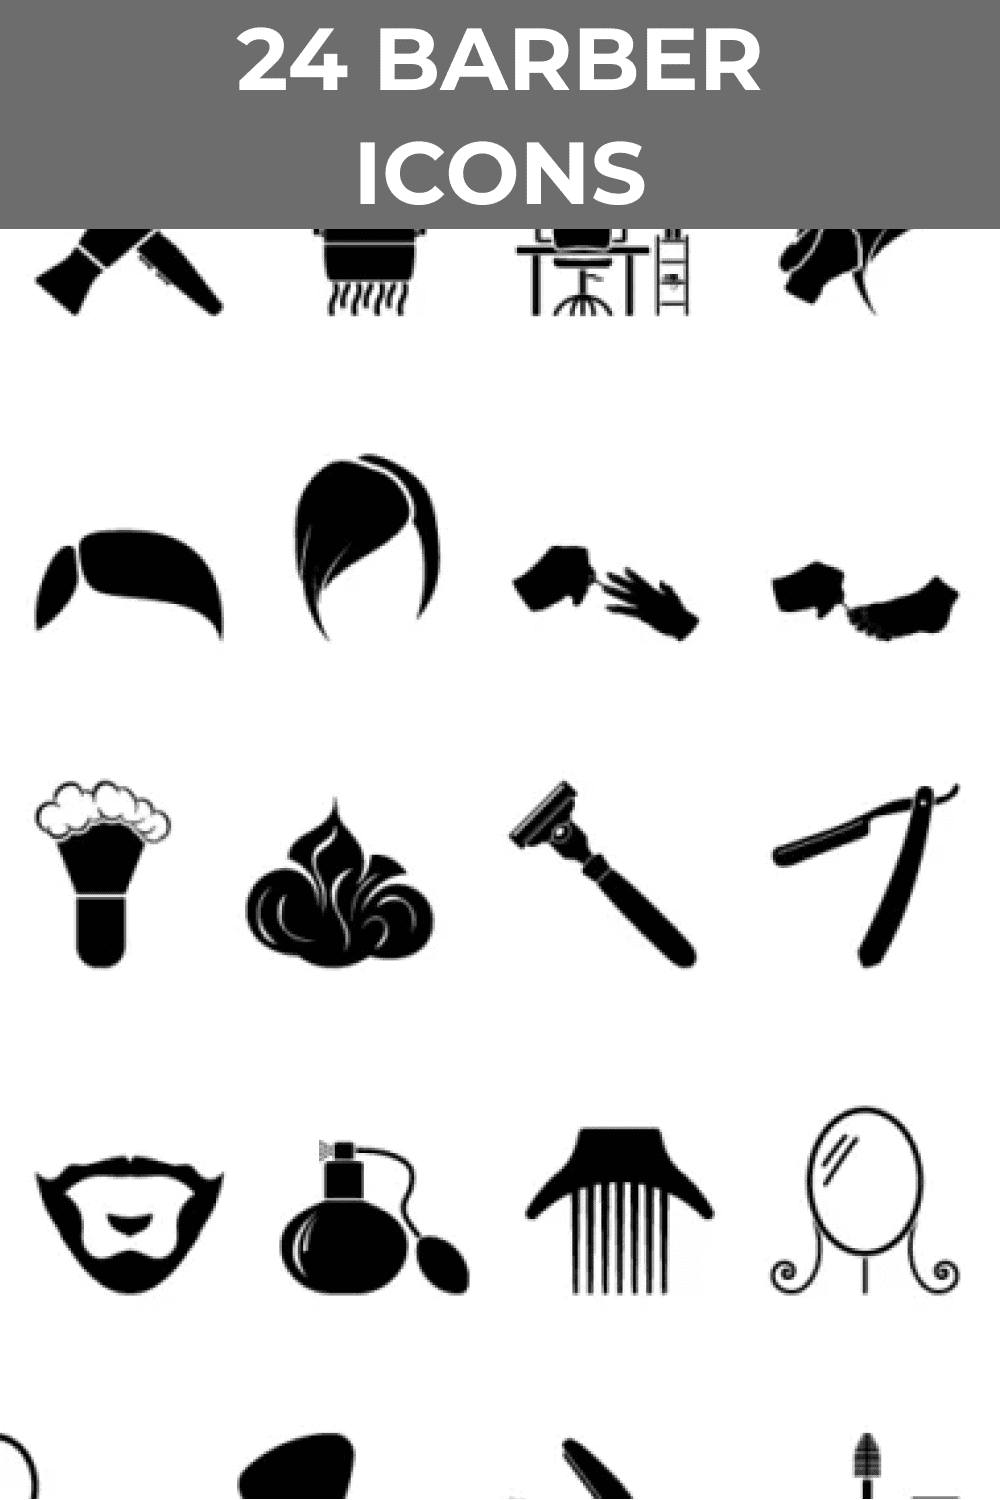 Useful icons for barber presentation.